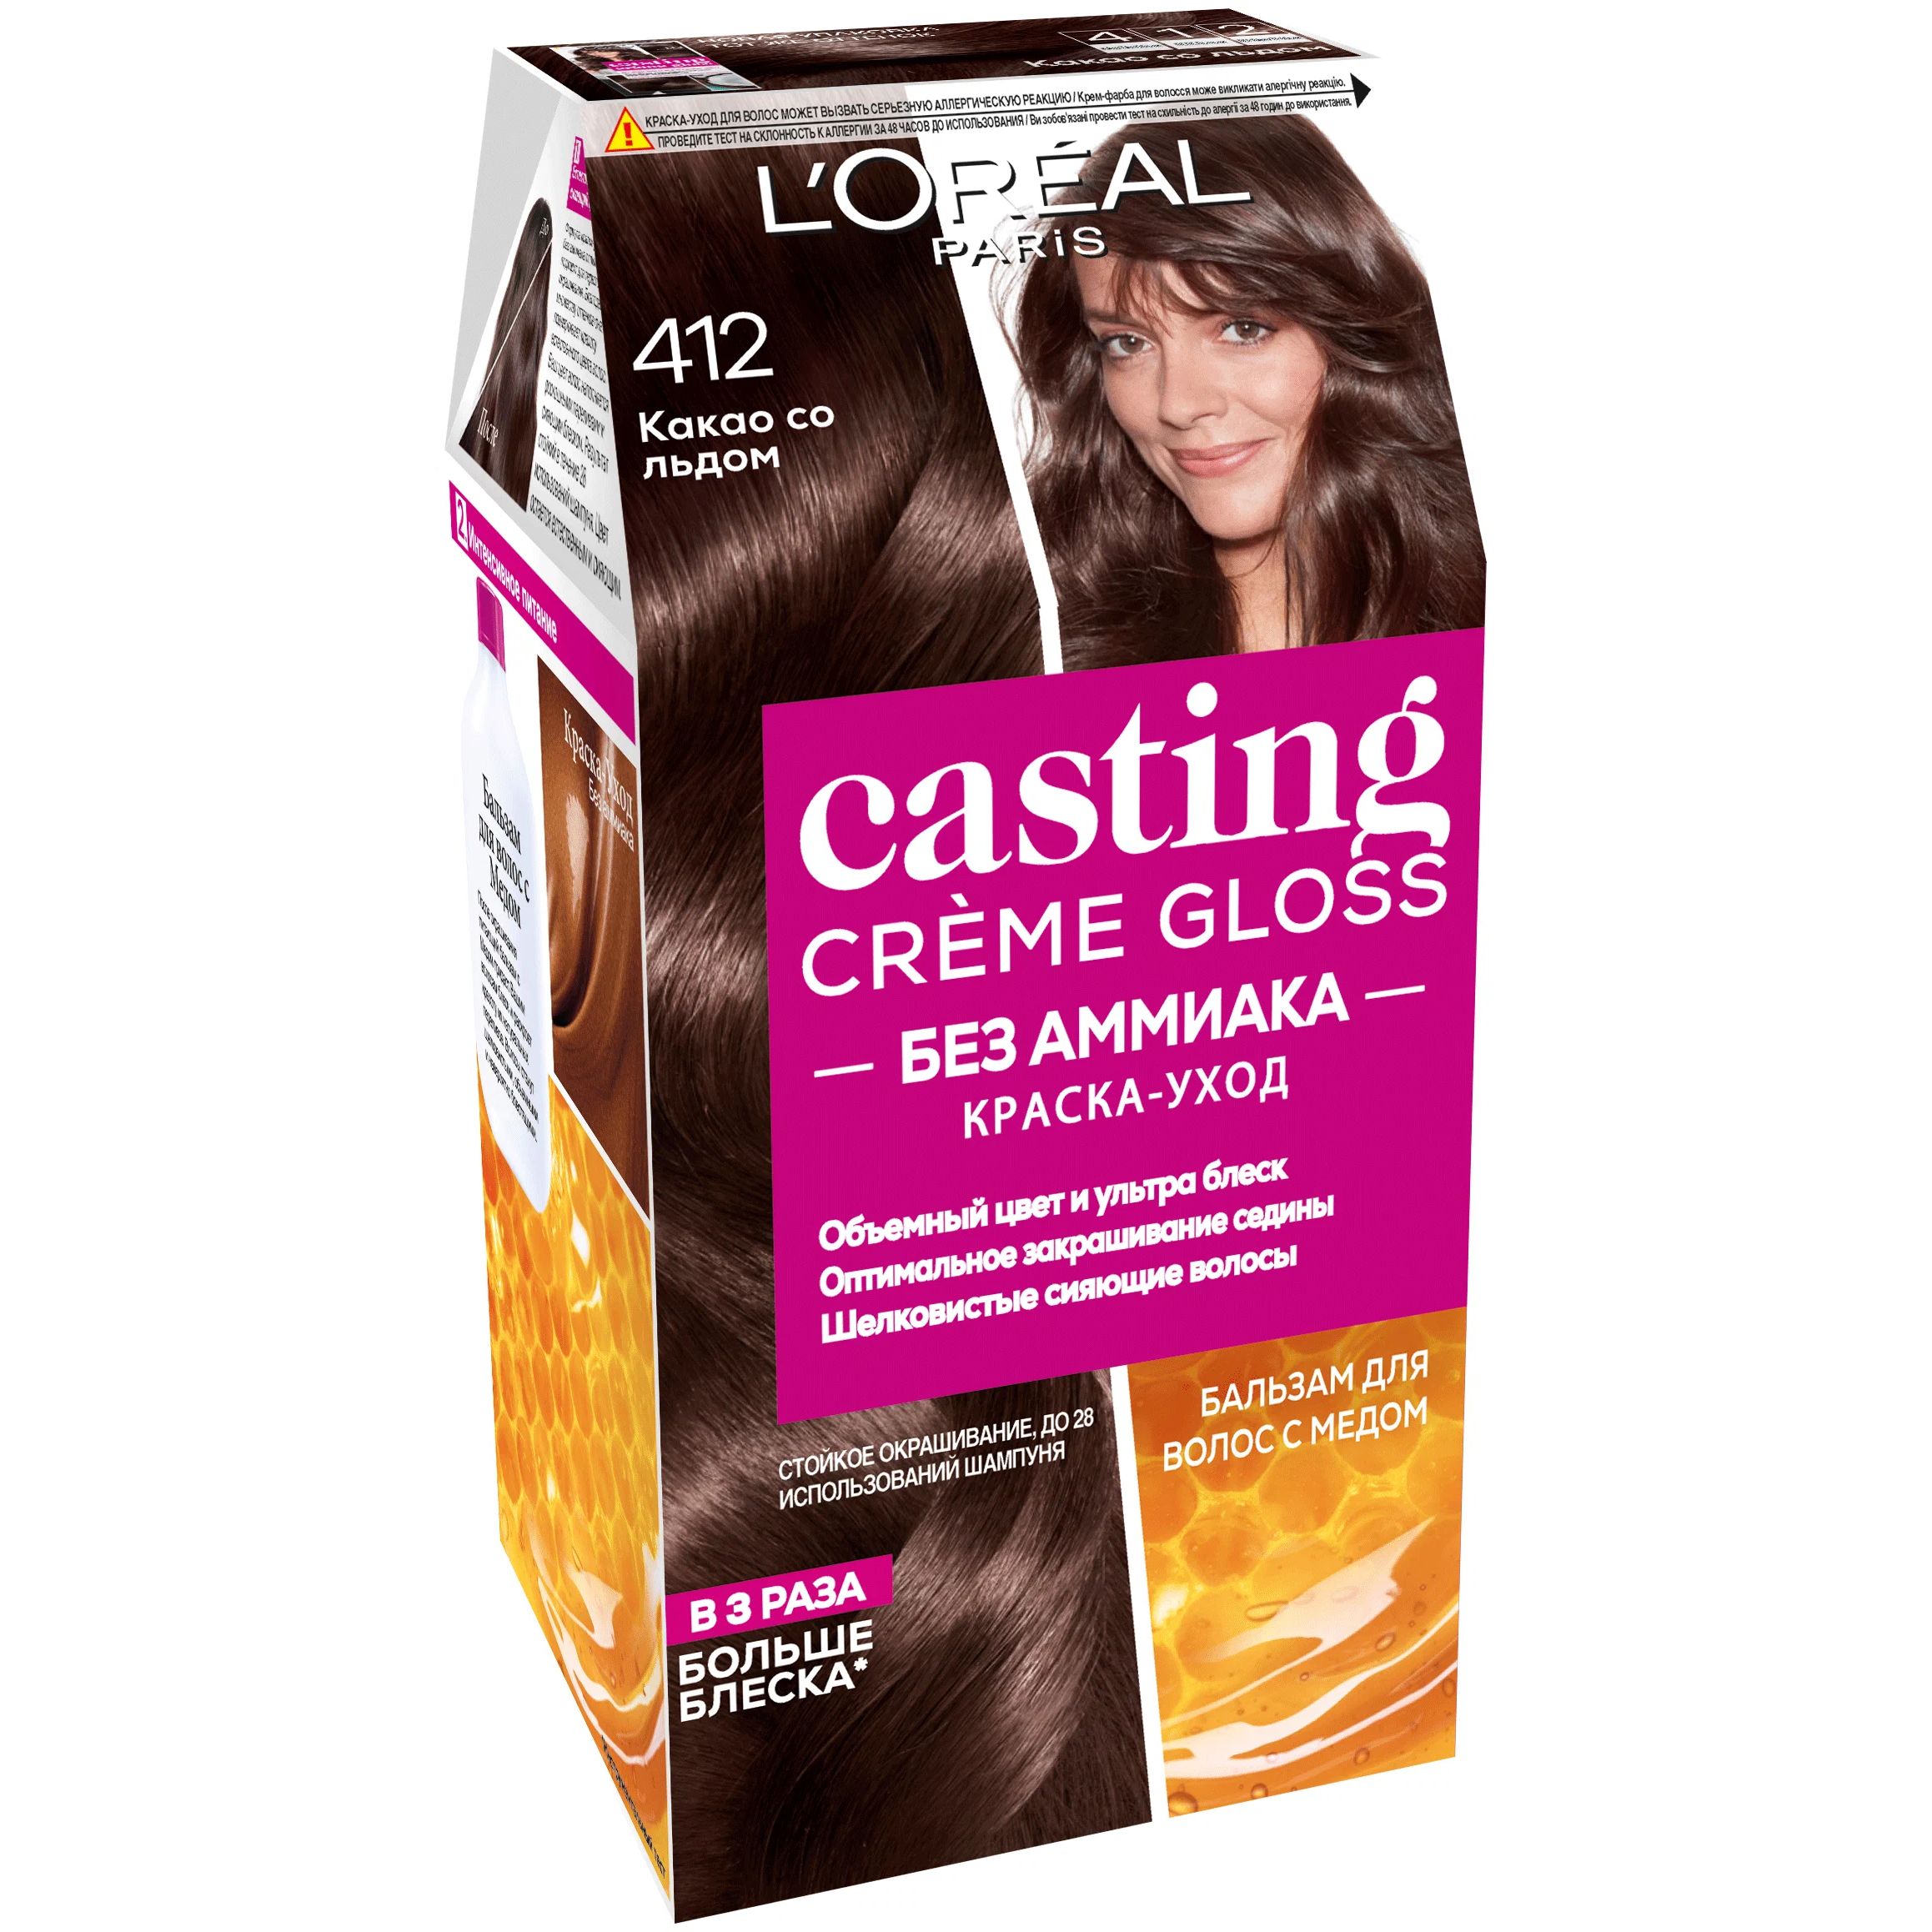 Краска-уход для волос L'Oreal Paris Casting Creme Gloss, 412 какао со льдом, , 180 мл